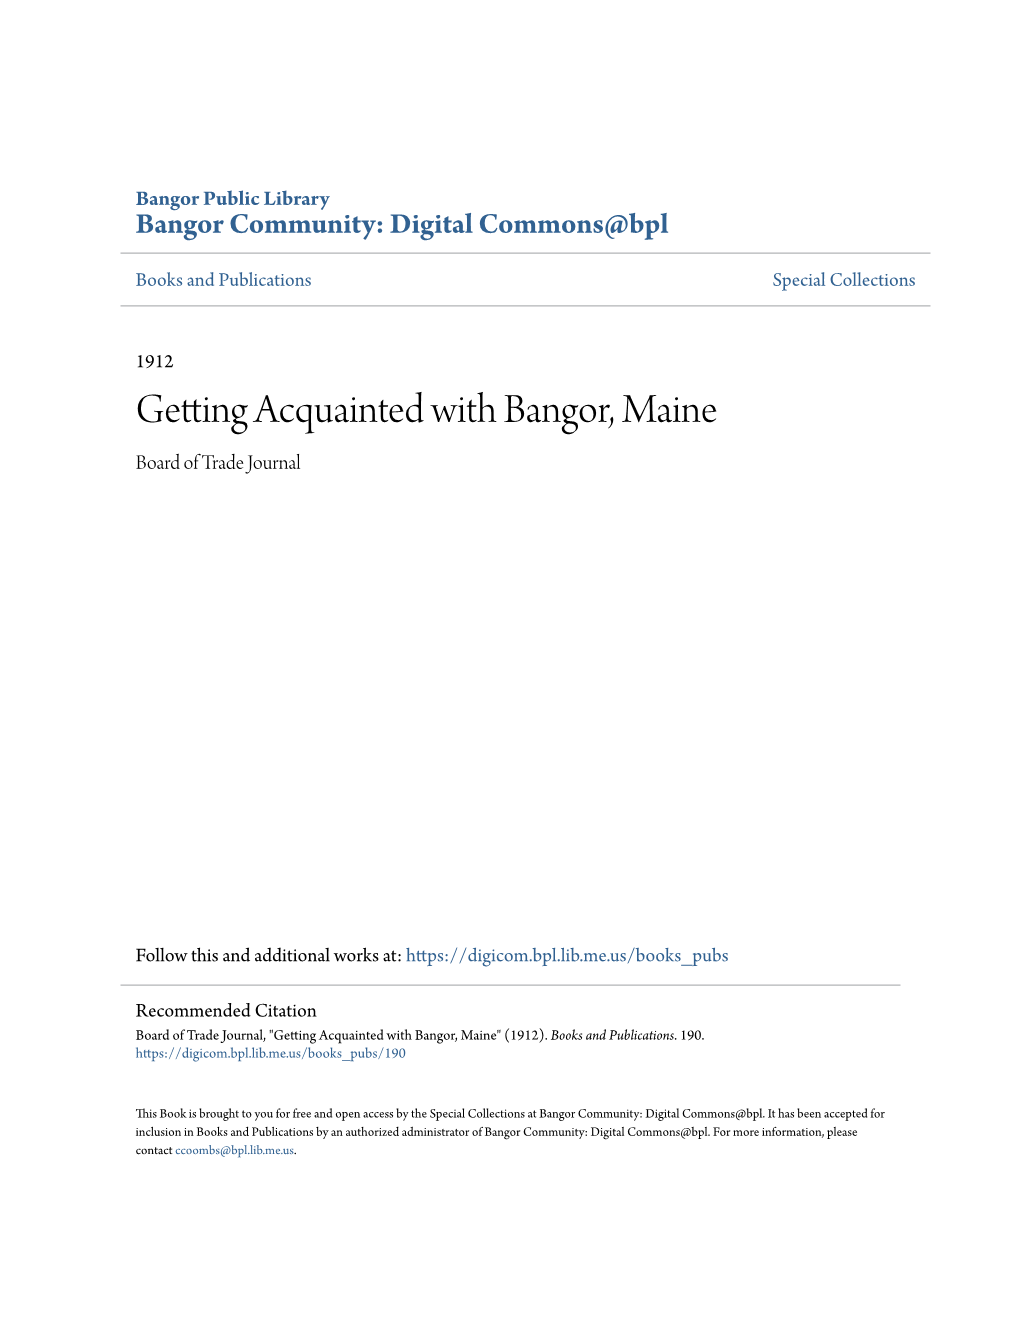 Bangor, Maine Board of Trade Journal